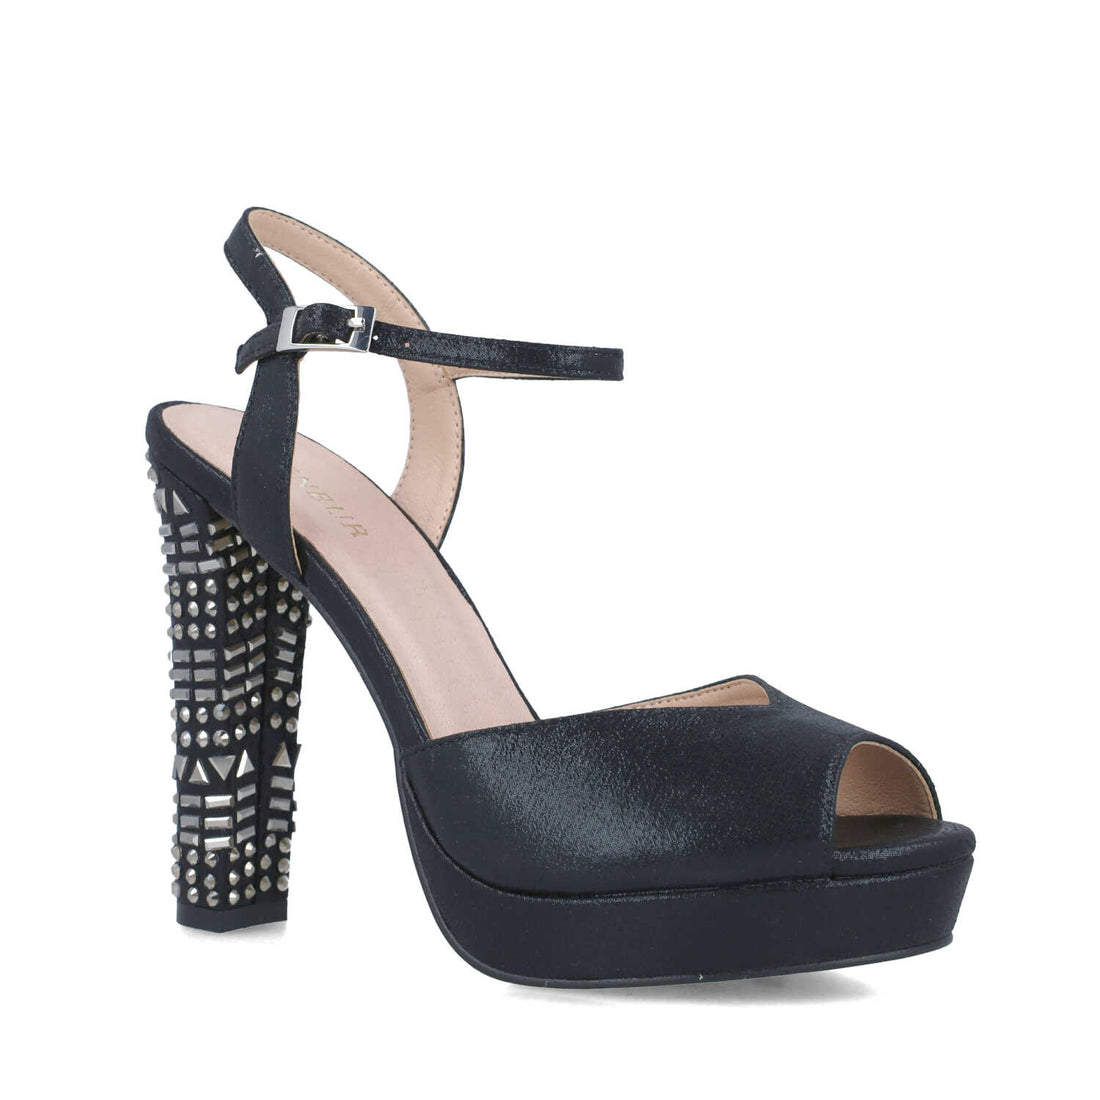 Black Platform Studded Peep Toe High-Heel Sandals With Ankle Strap